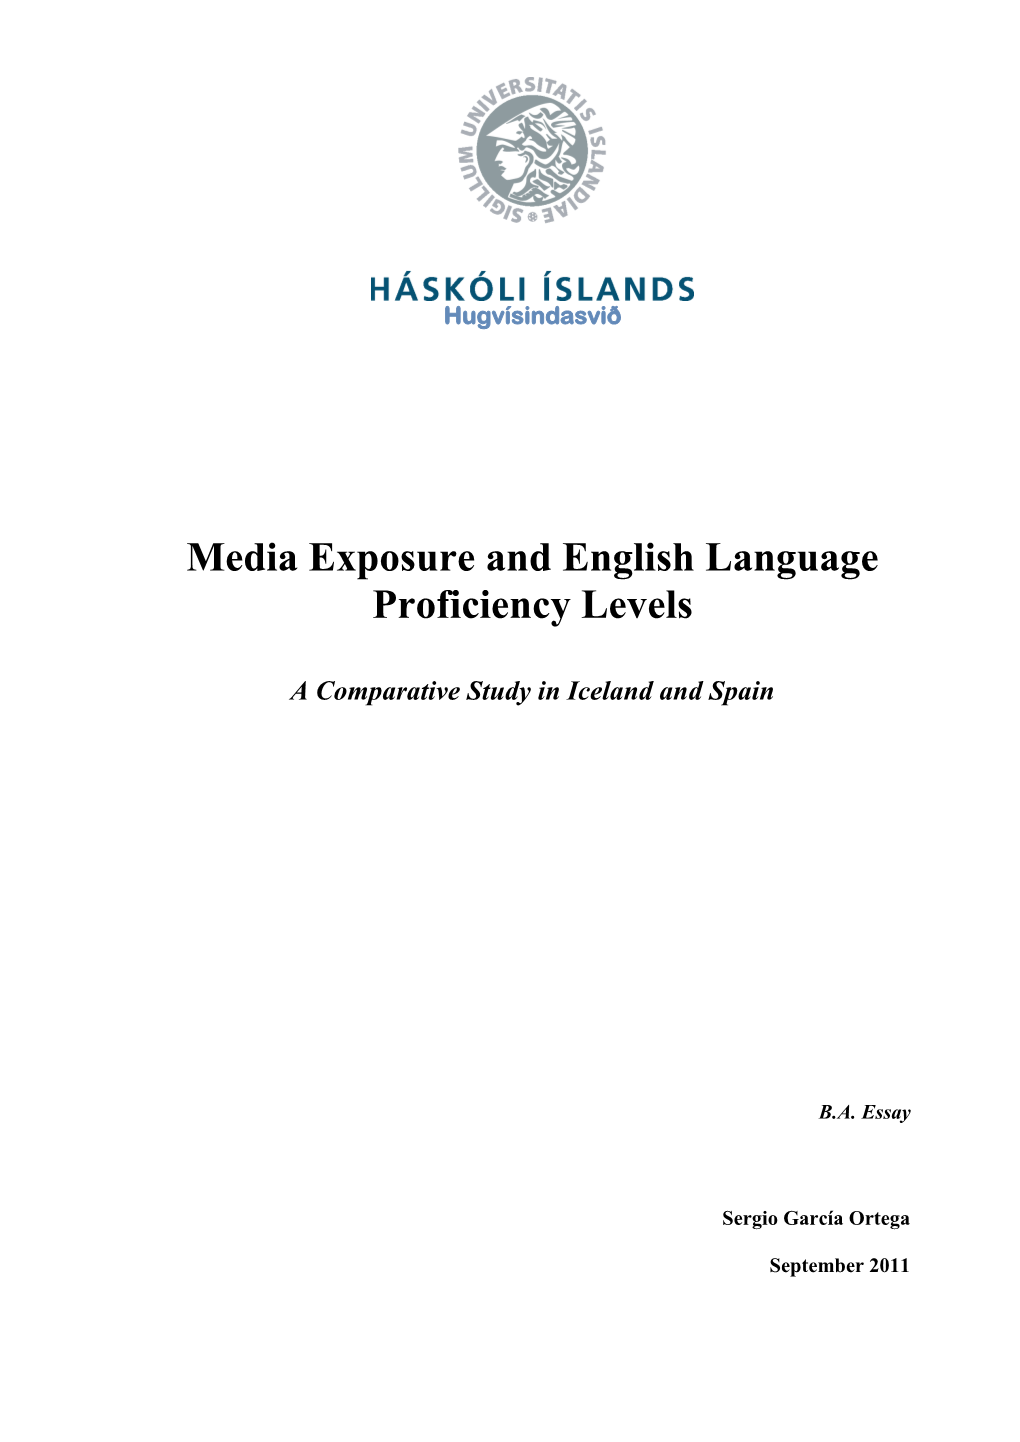 Media Exposure and English Language Proficiency Levels